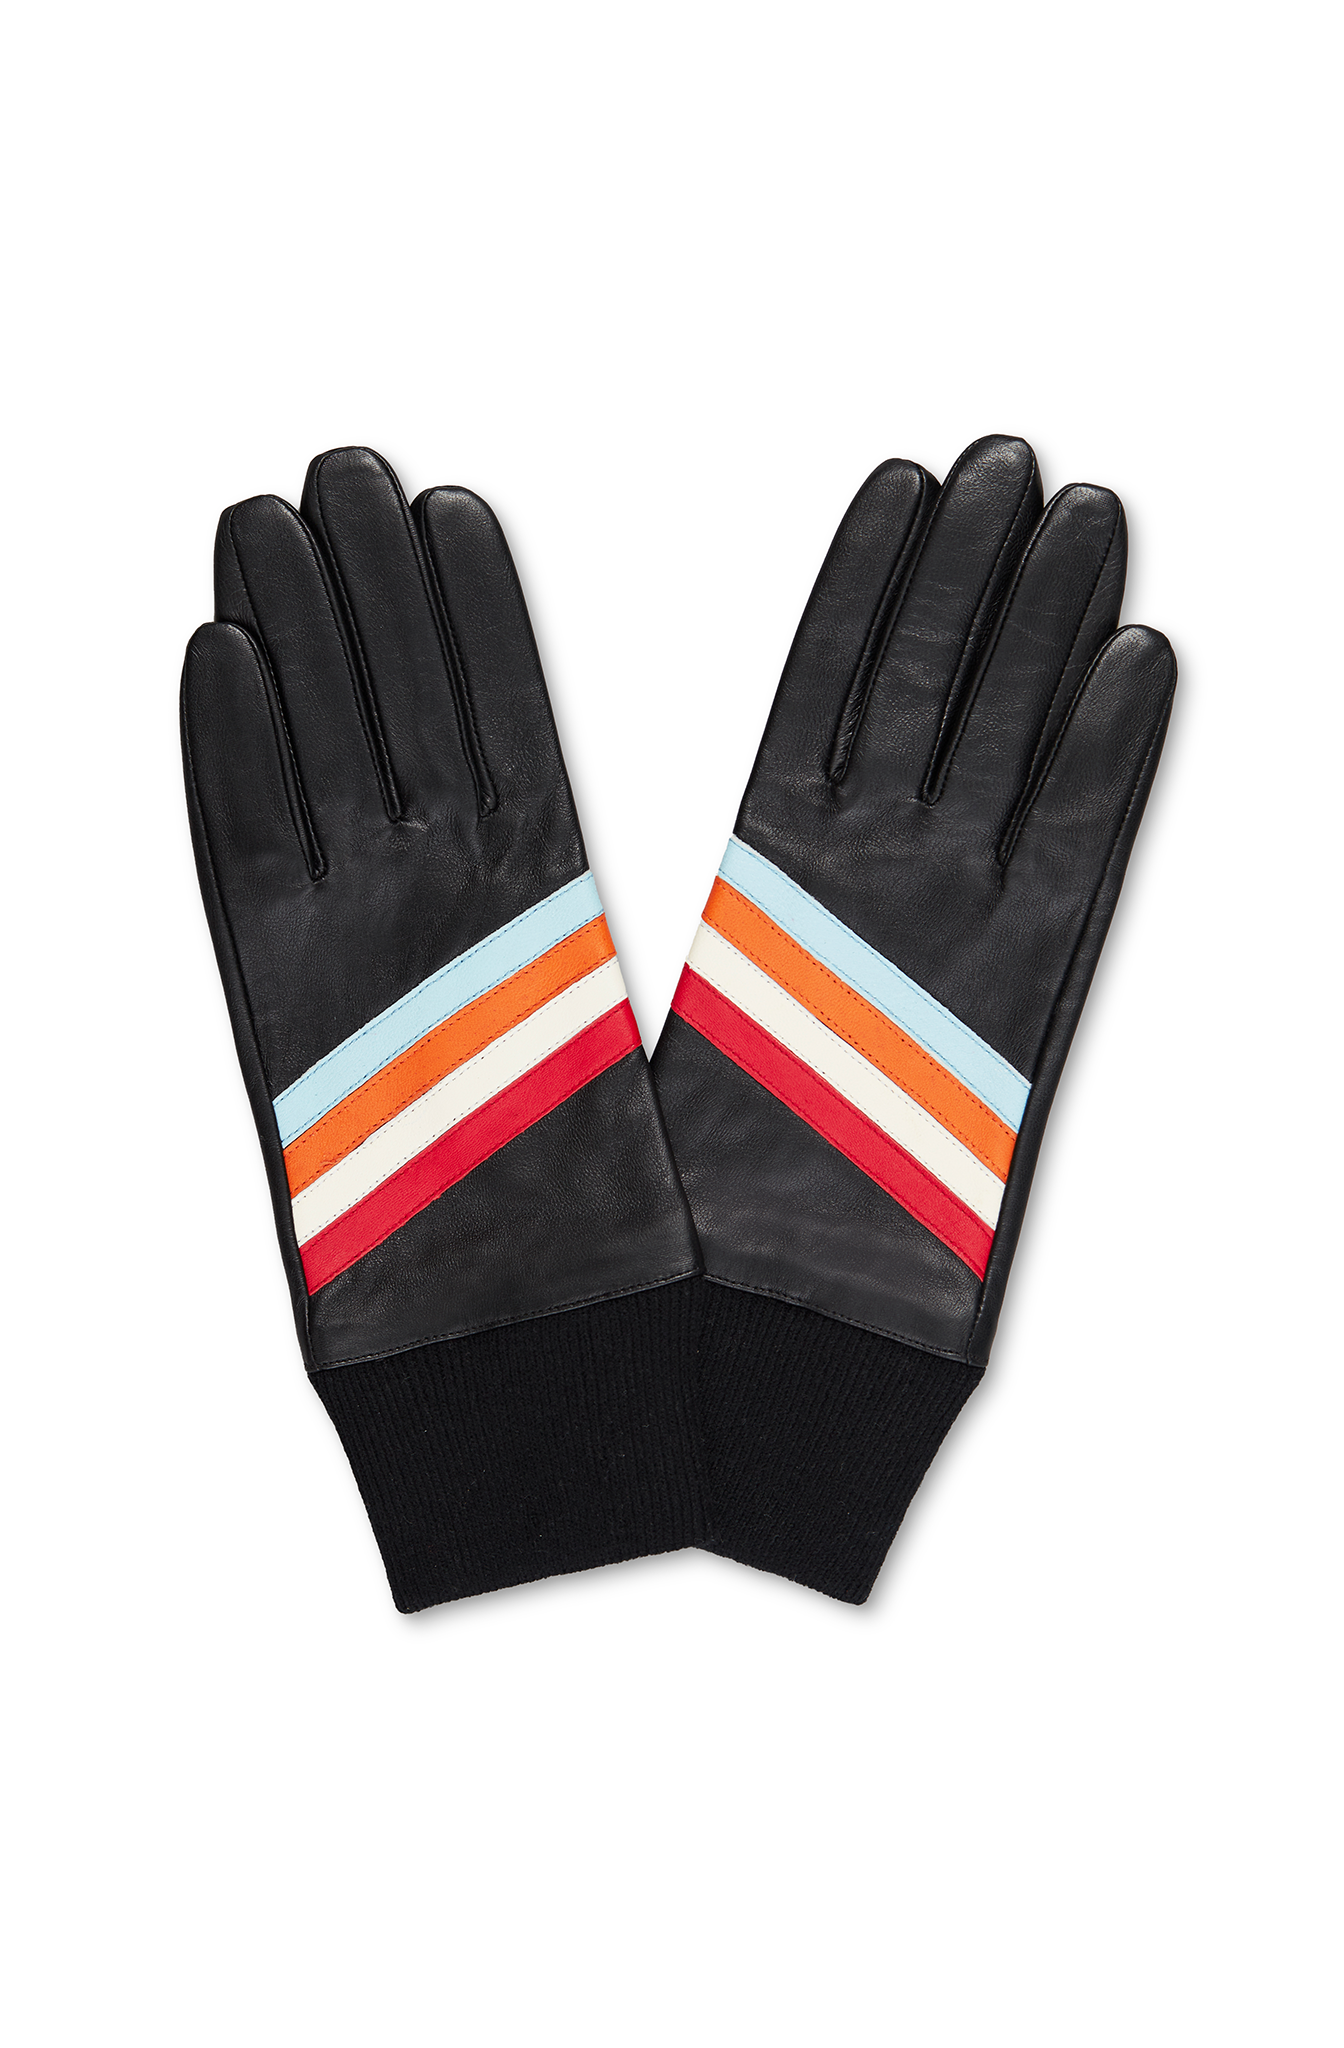 Mabel Sheppard - Retro Stripe Gloves